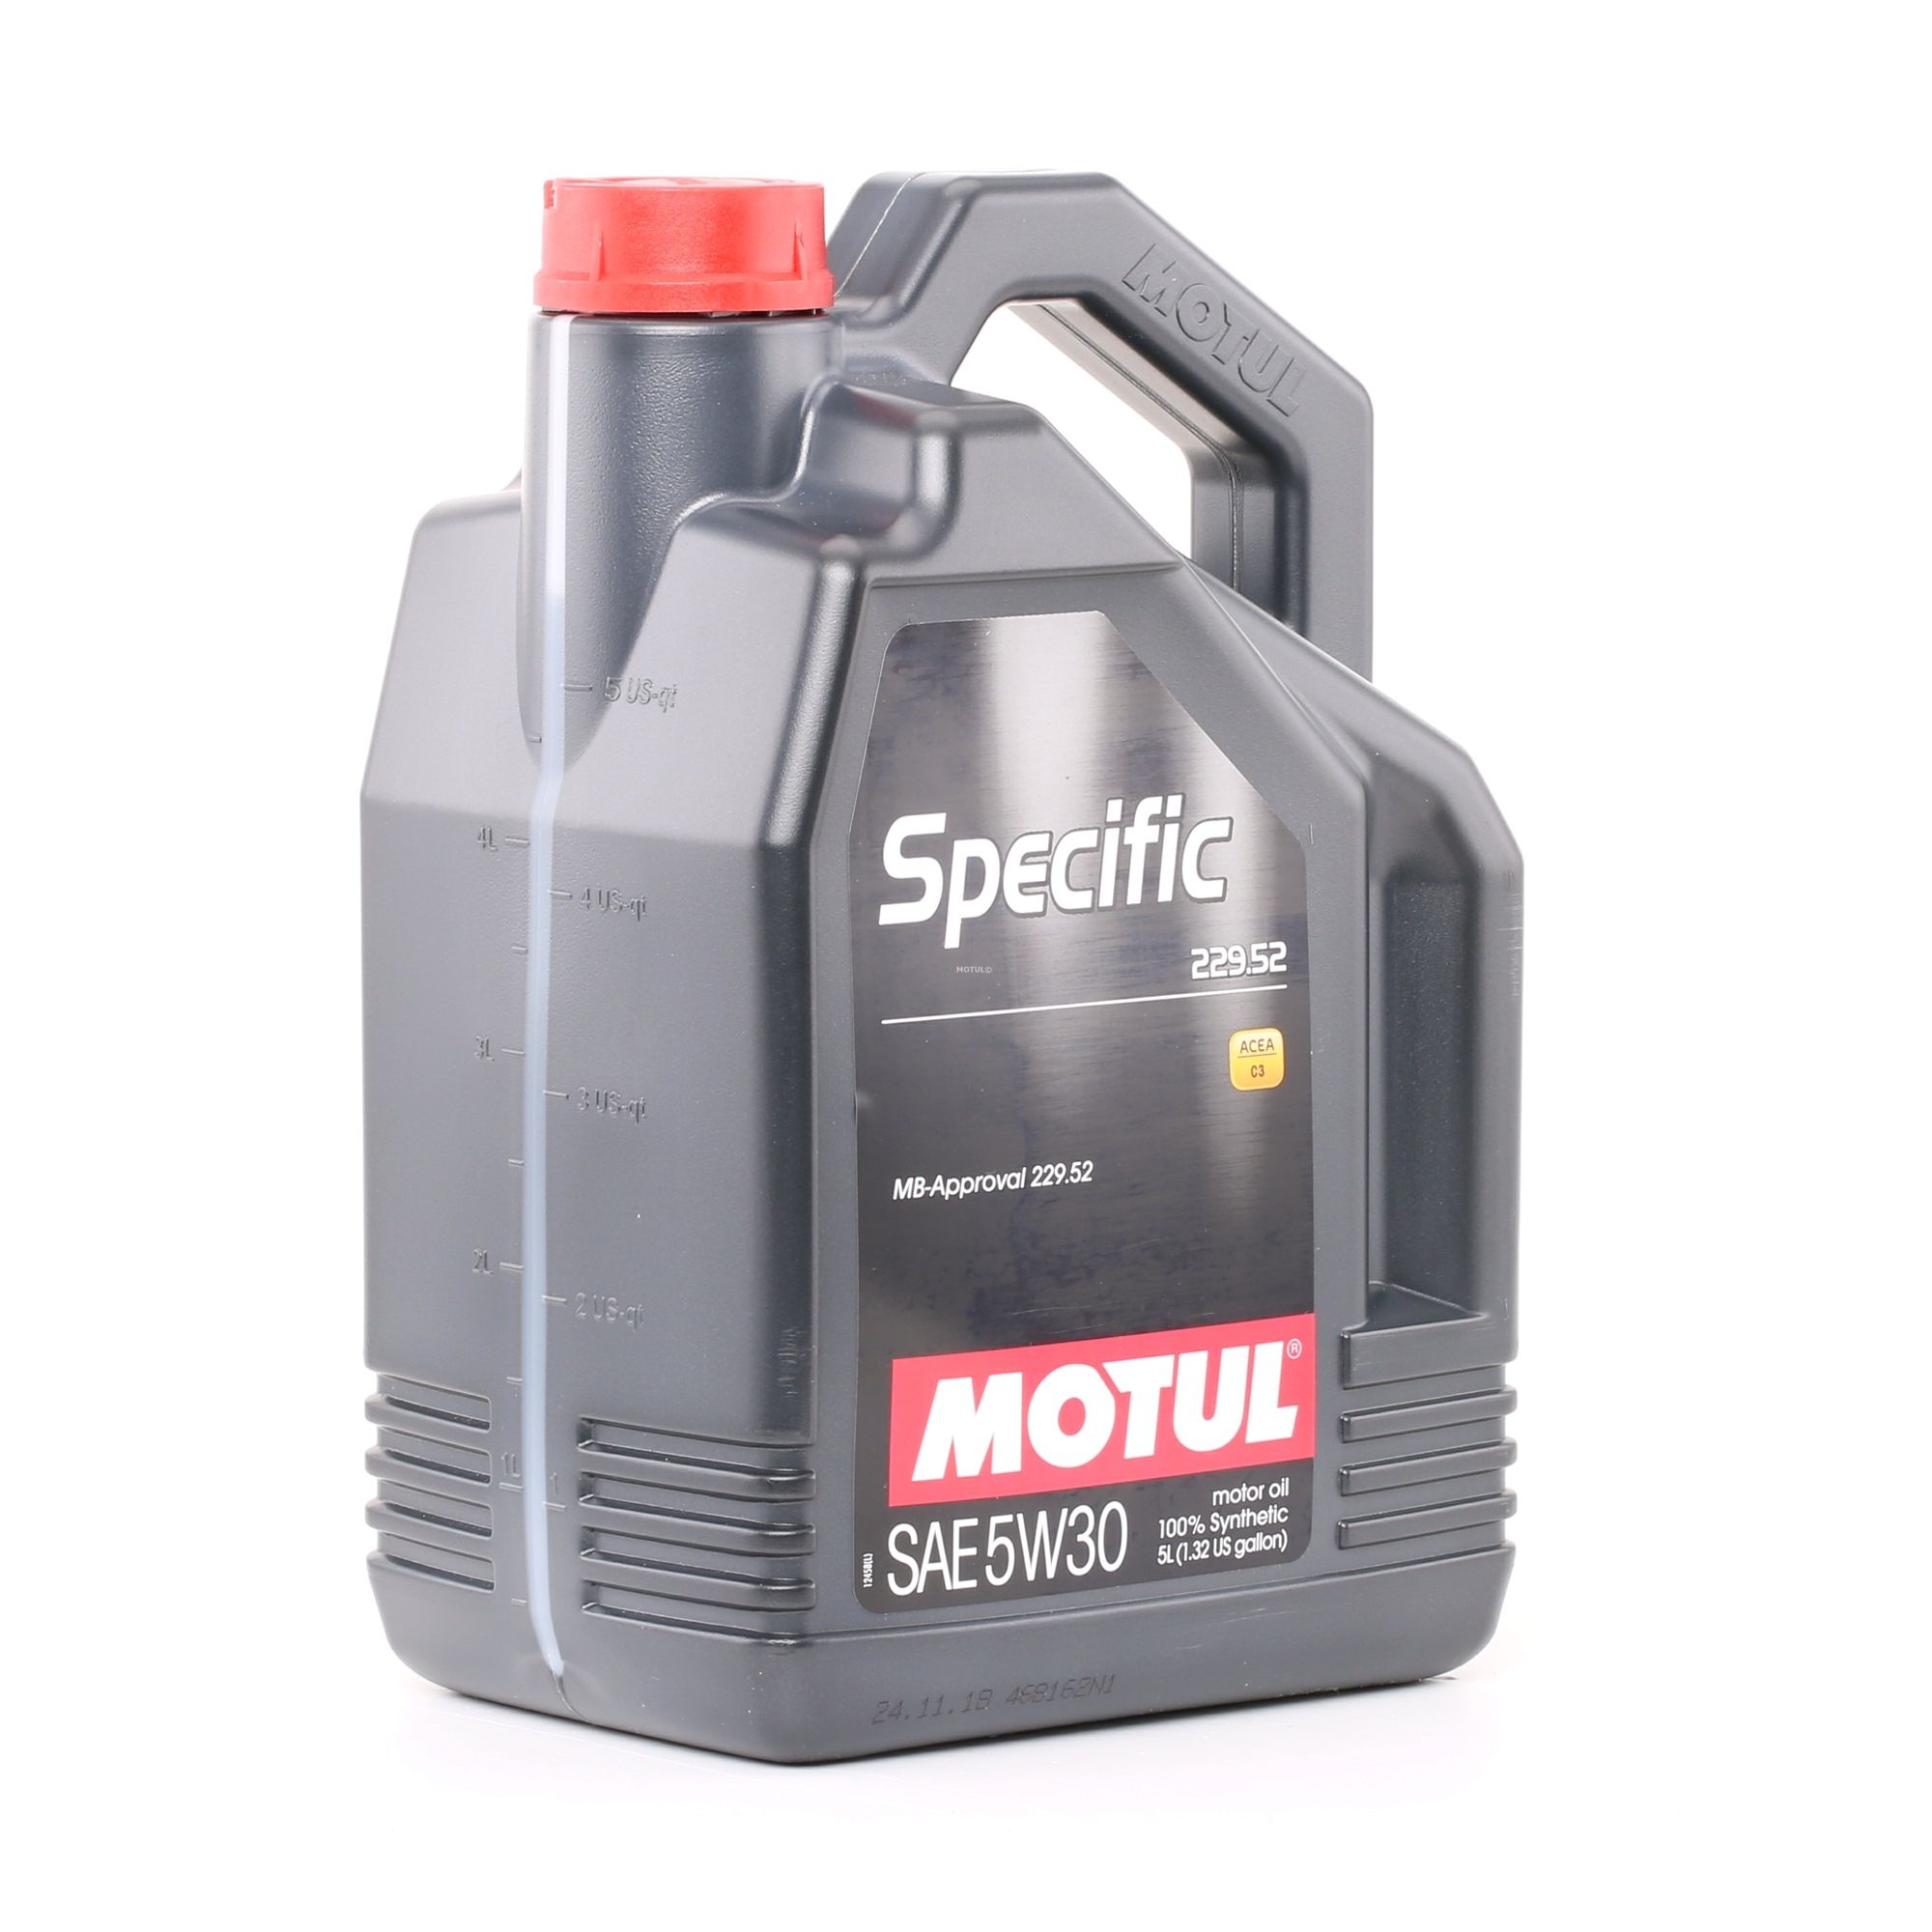 SPECIFIC229525W30 MOTUL SPECIFIC, 229.52 5W-30, 5l, Synthetiköl Motoröl 104845 günstig